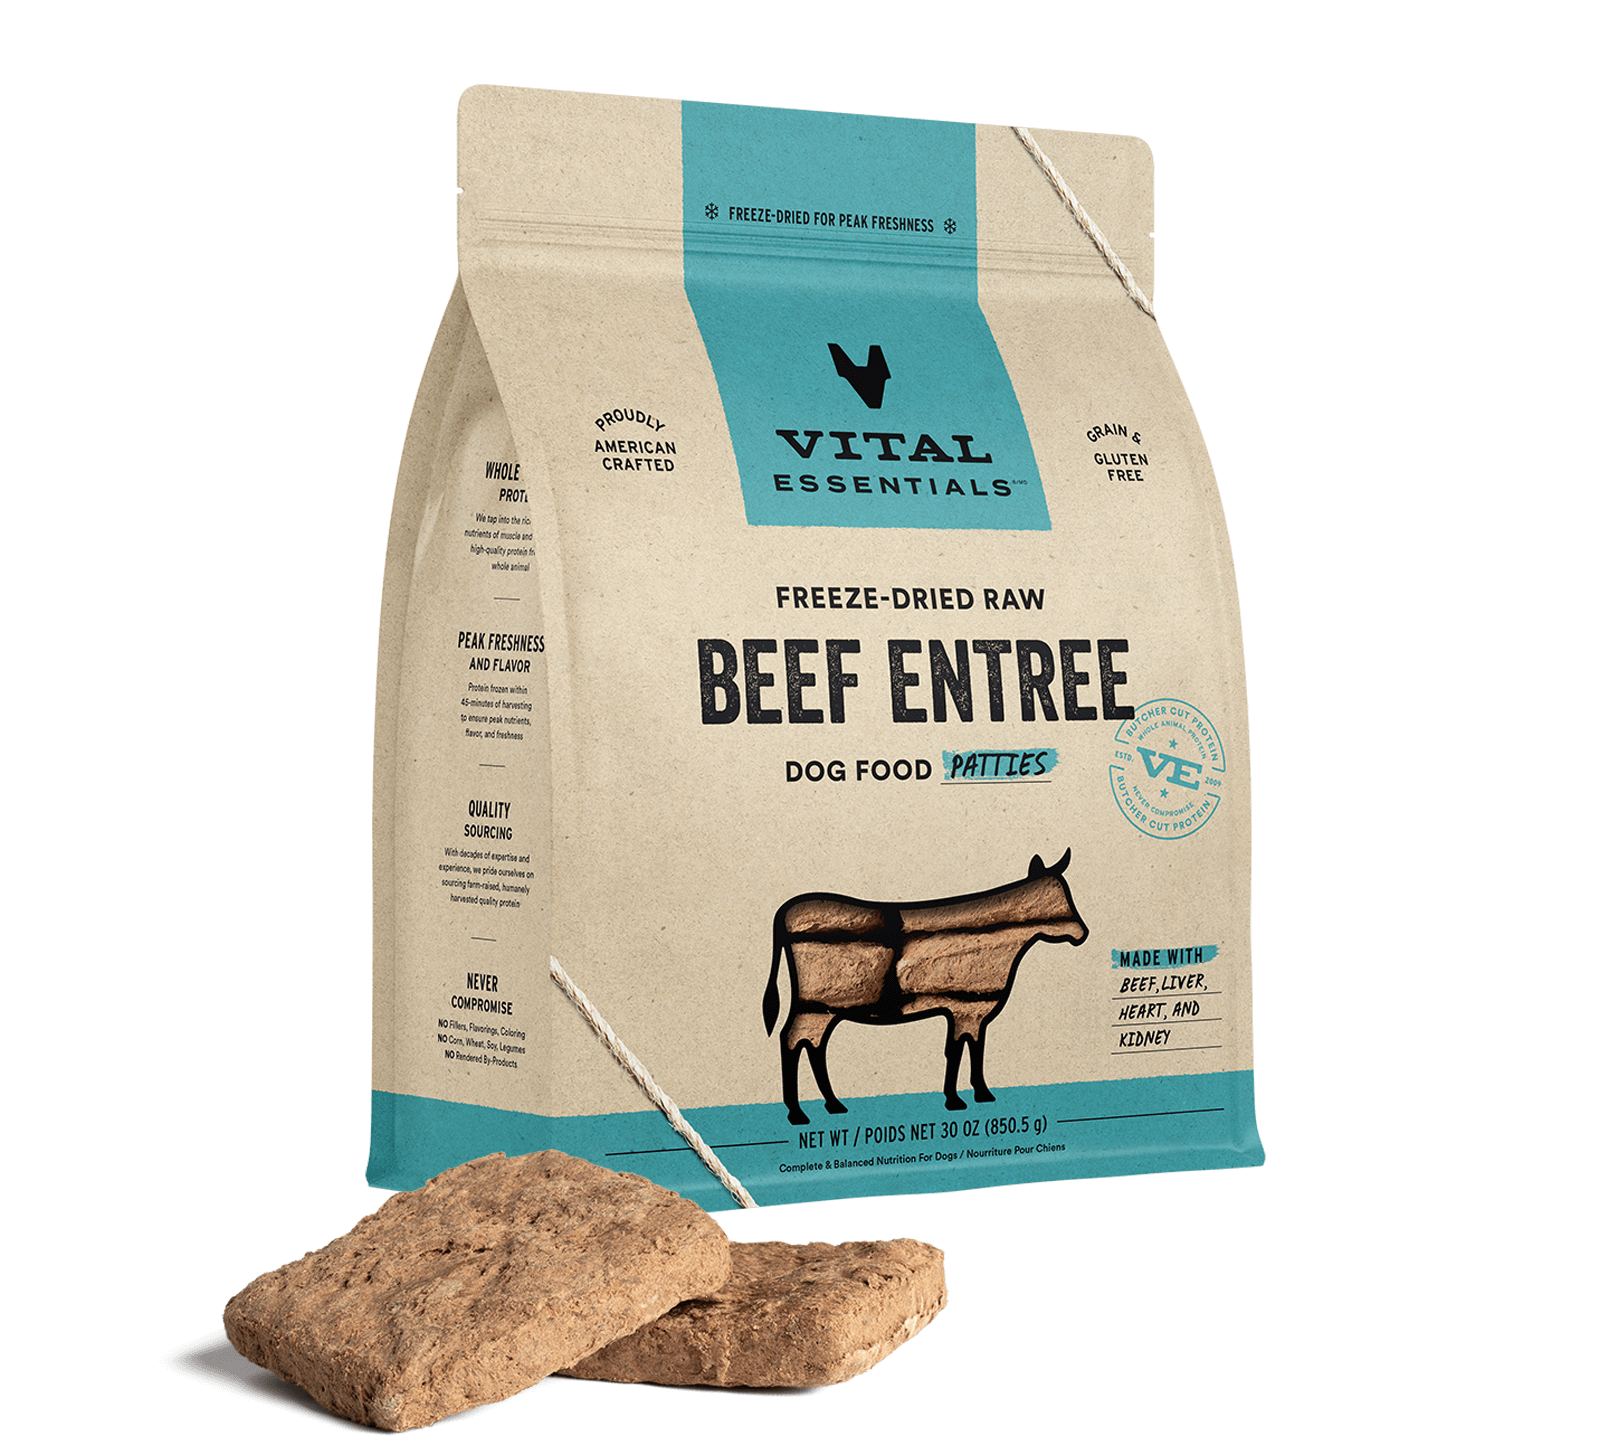 Vital Essentials Freeze-Dried Raw Beef Entree Dog Food Patties, 30 oz - Health/First Aid